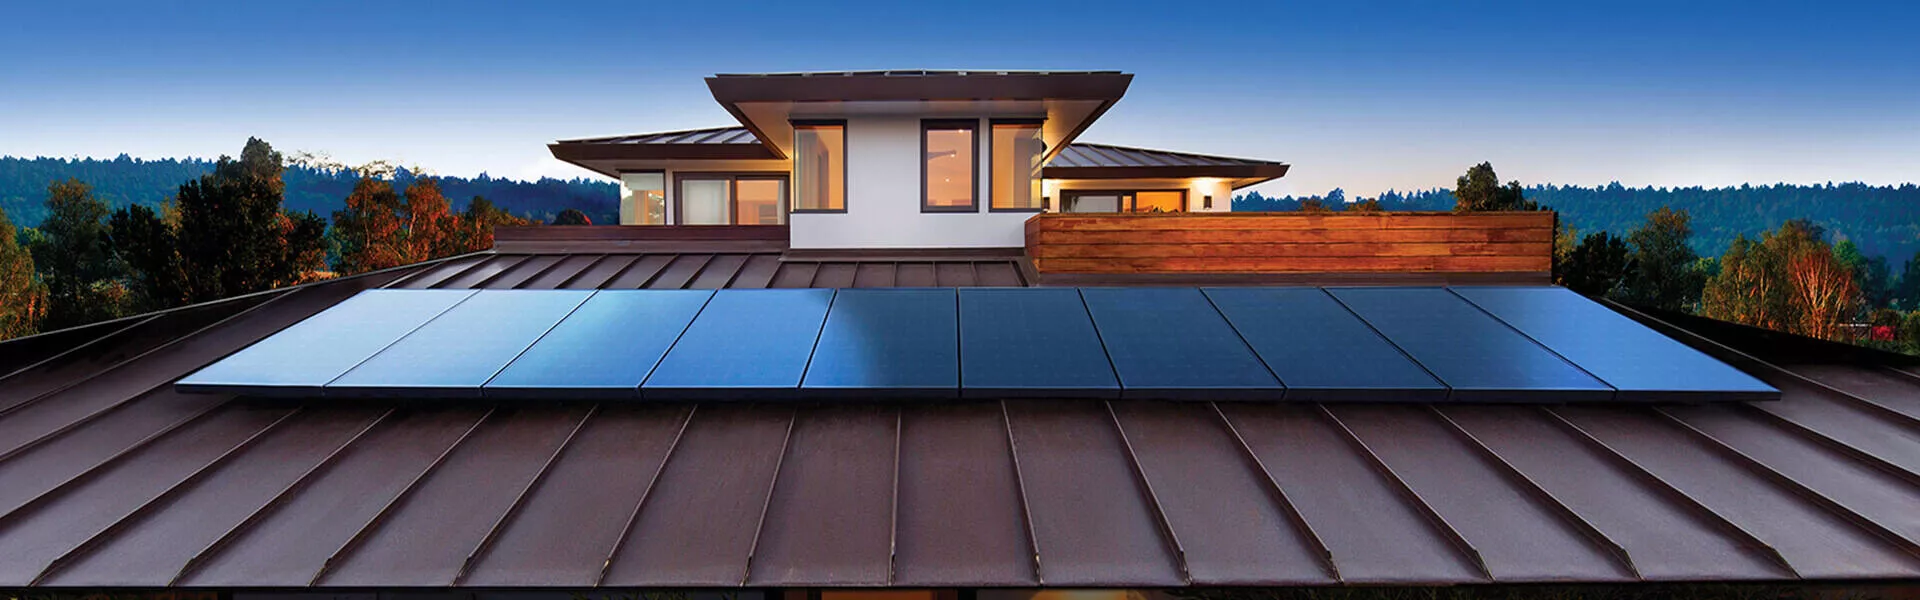 How Do Solar Panels Work on Home